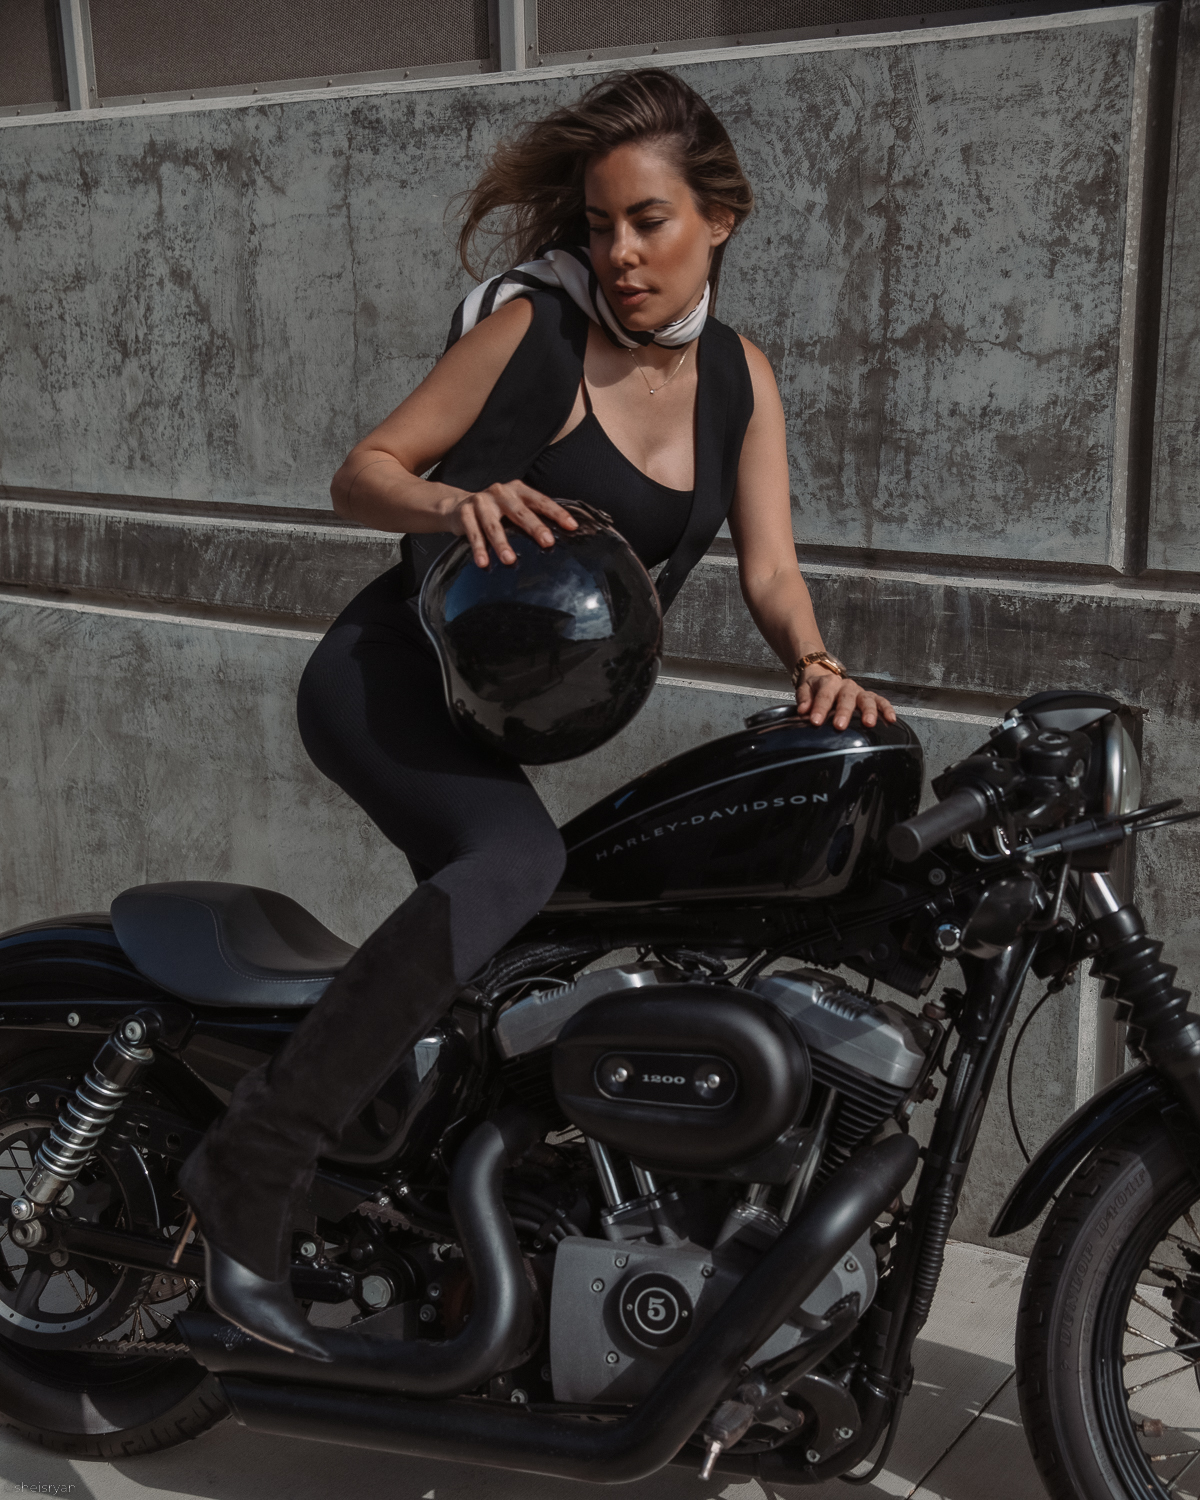 helmet and girl on motorcycle 